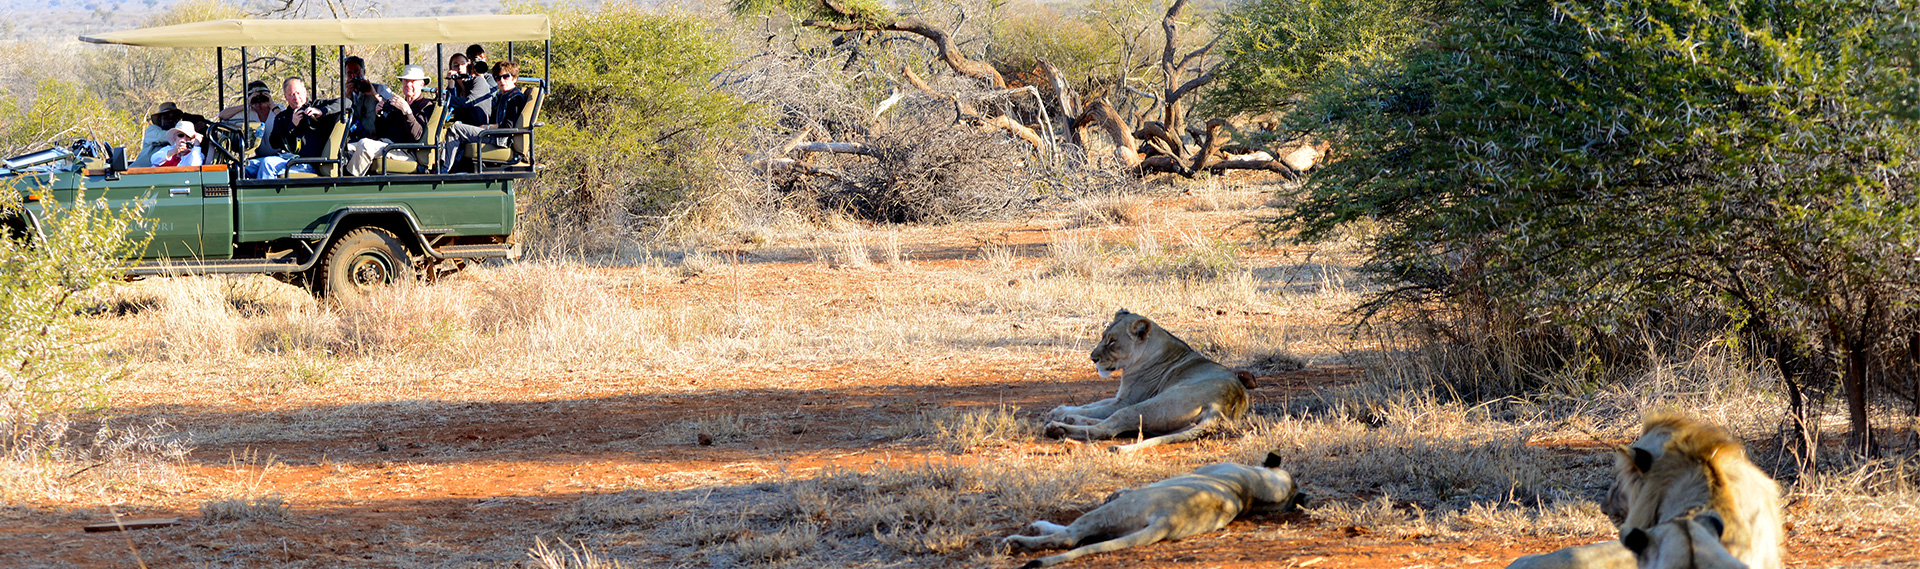 Safari lion siting